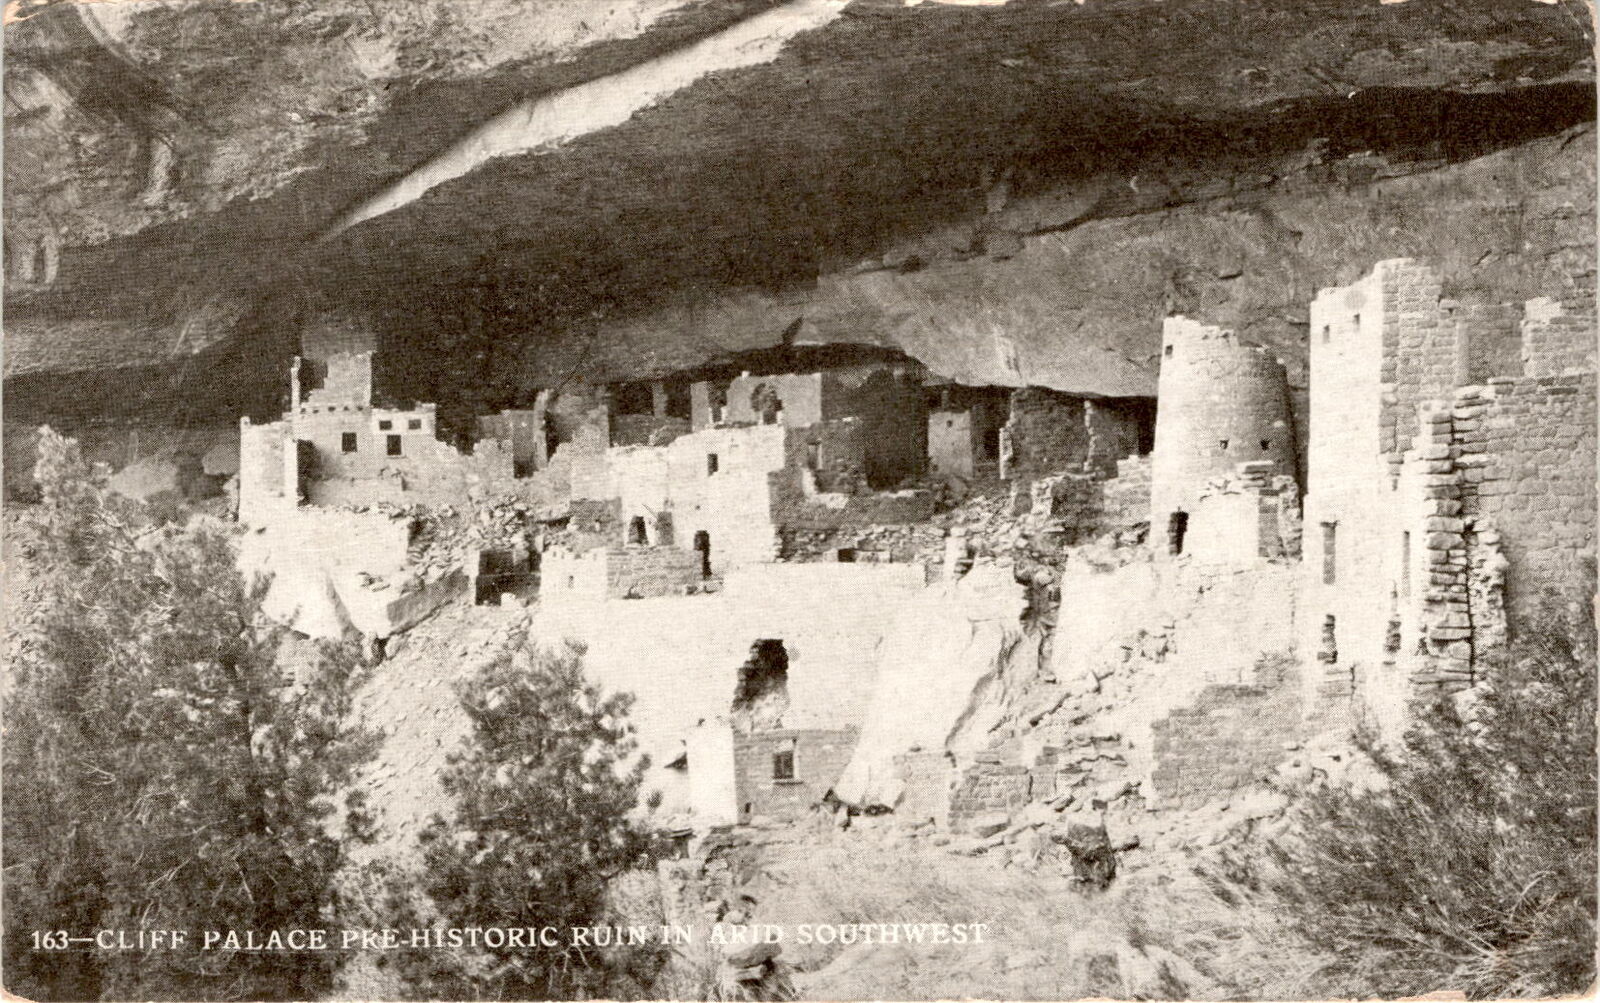 Cliff Palace, pre-historic ruin, Southwest, Arizona, Mesa Verde Postcard